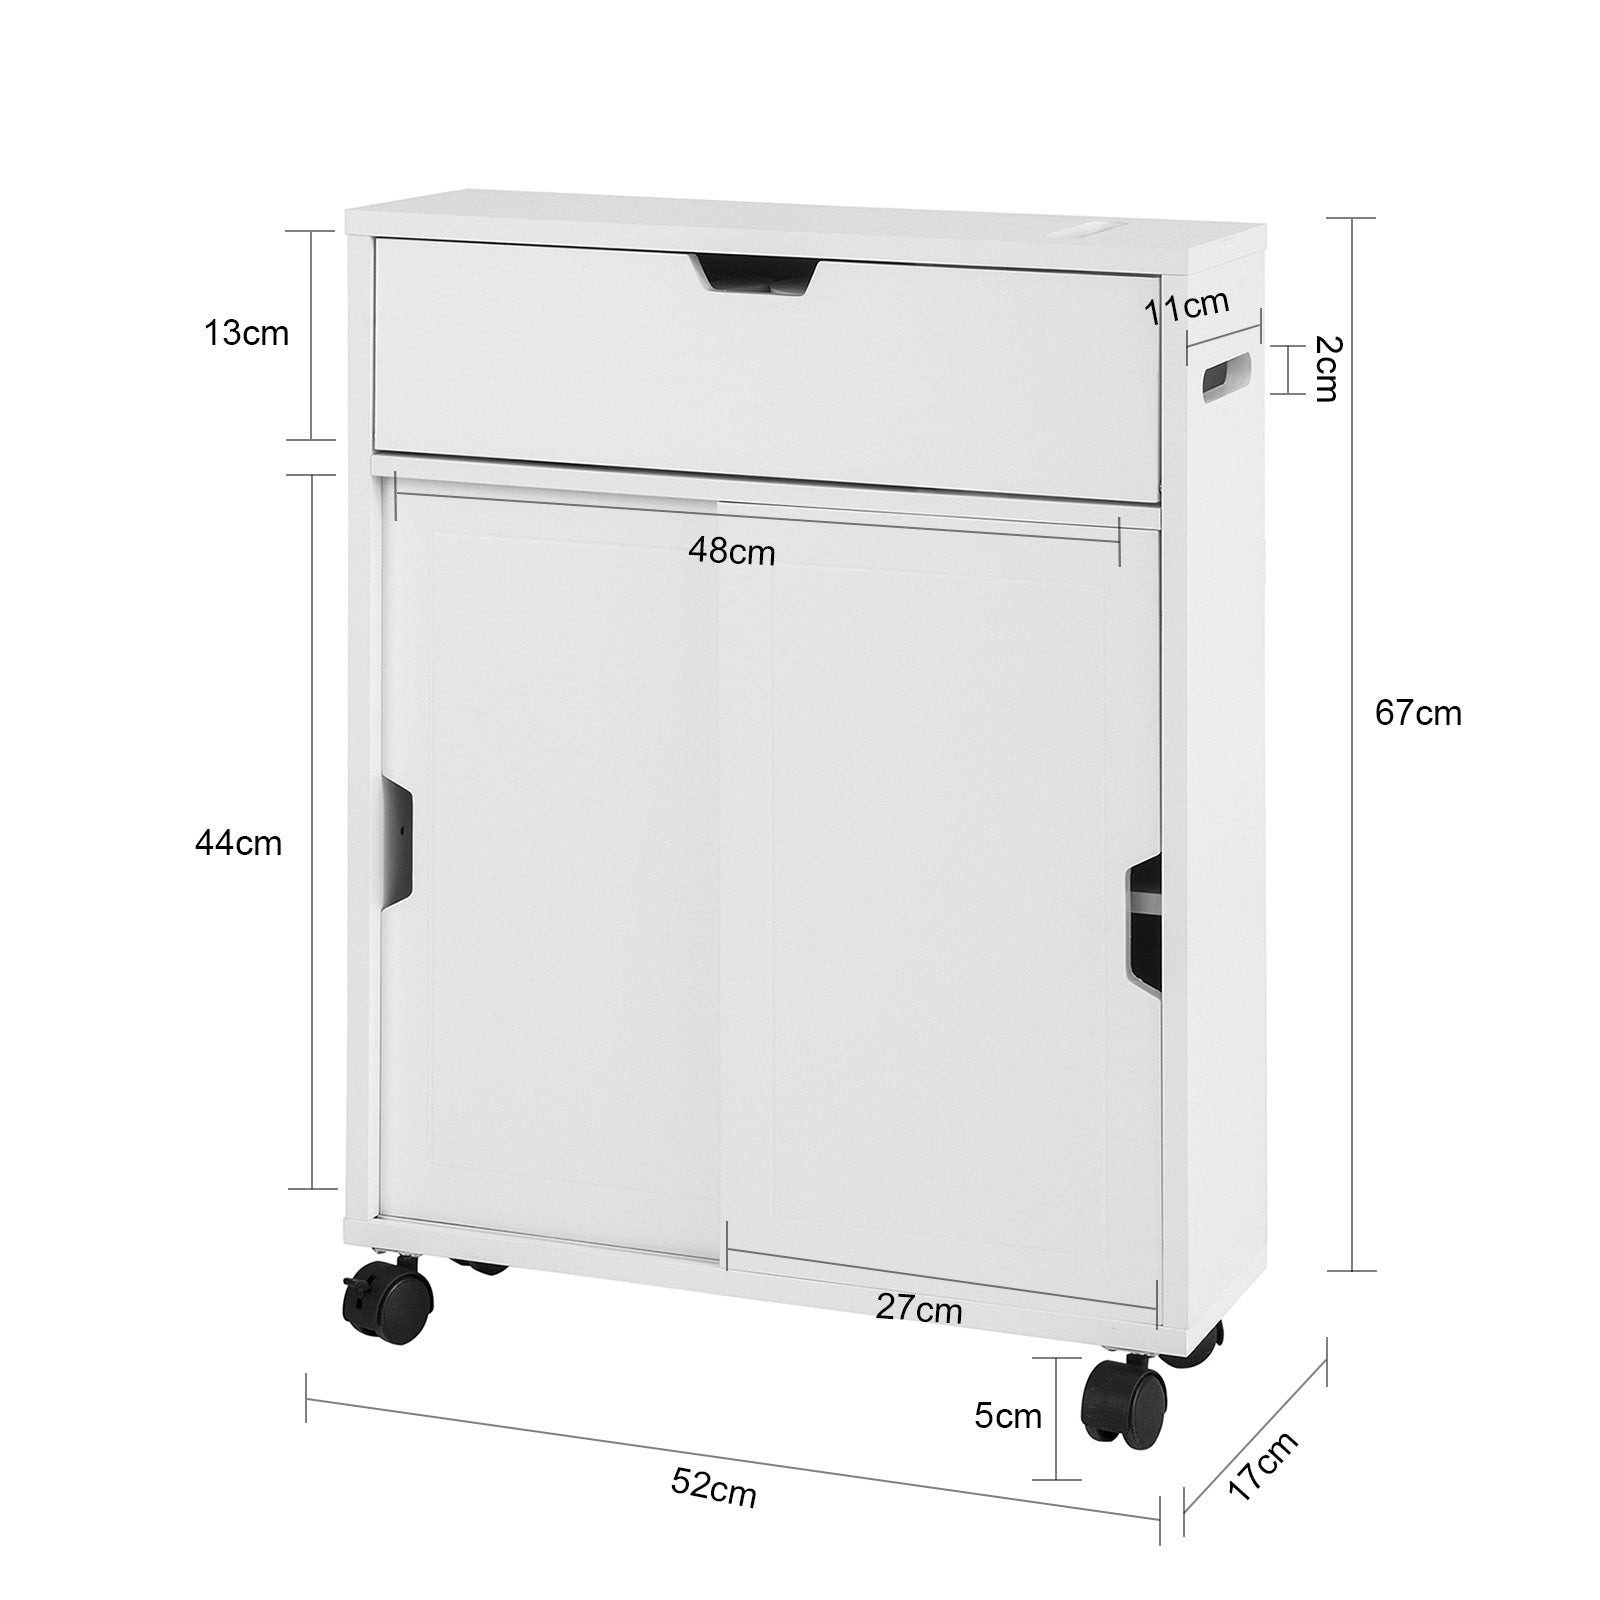 SoBuy BZR31-W Bathroom Cabinet Storage Shelf on Wheels,Toilet Paper Cabinet